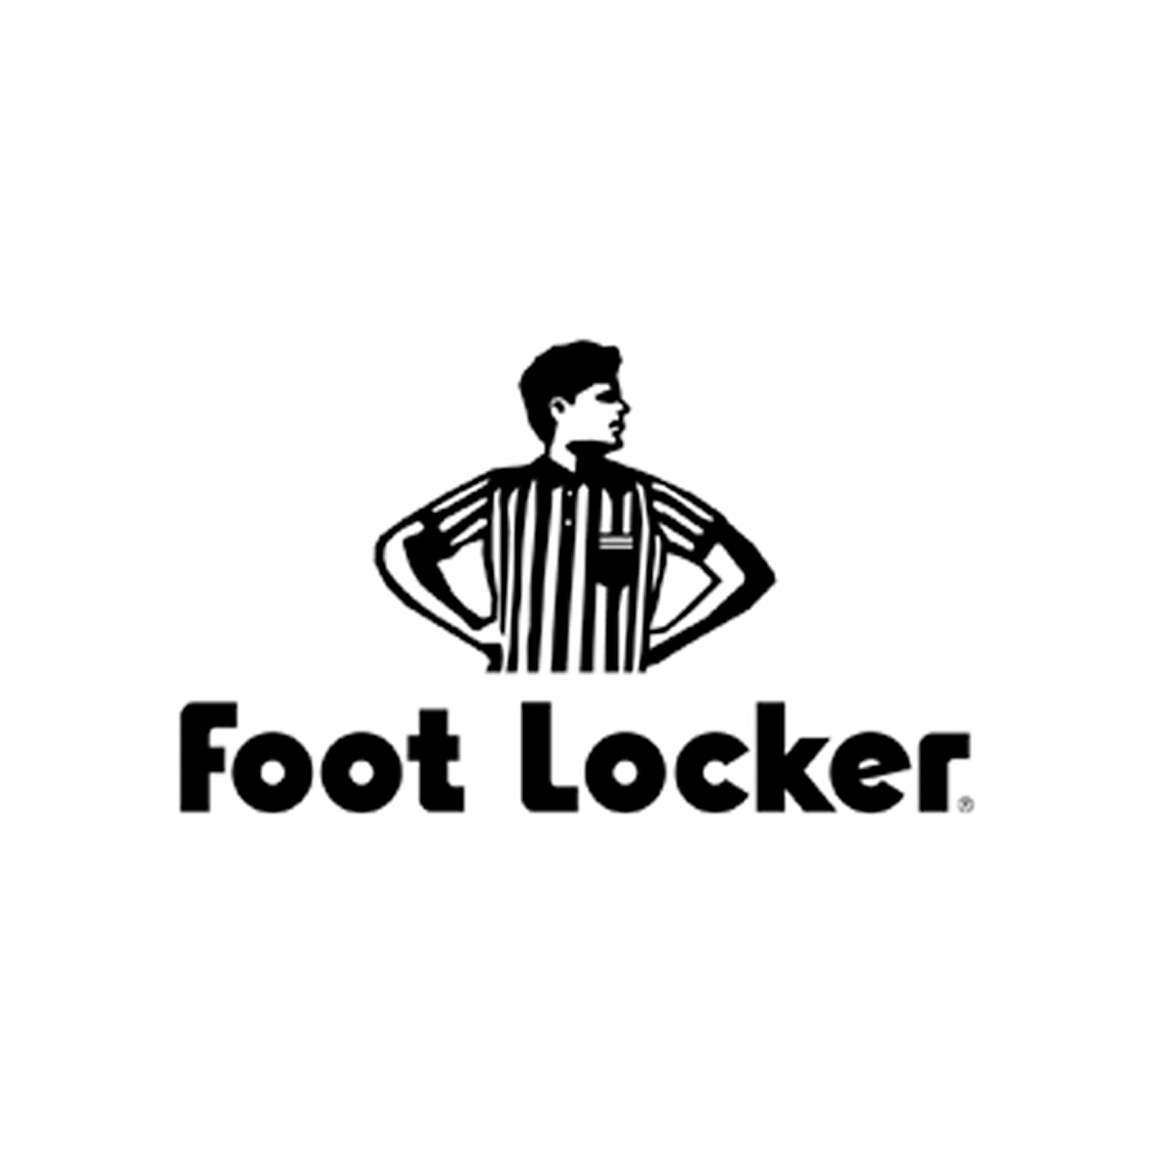 Foot Locker: sales down by 5.7% in 2020